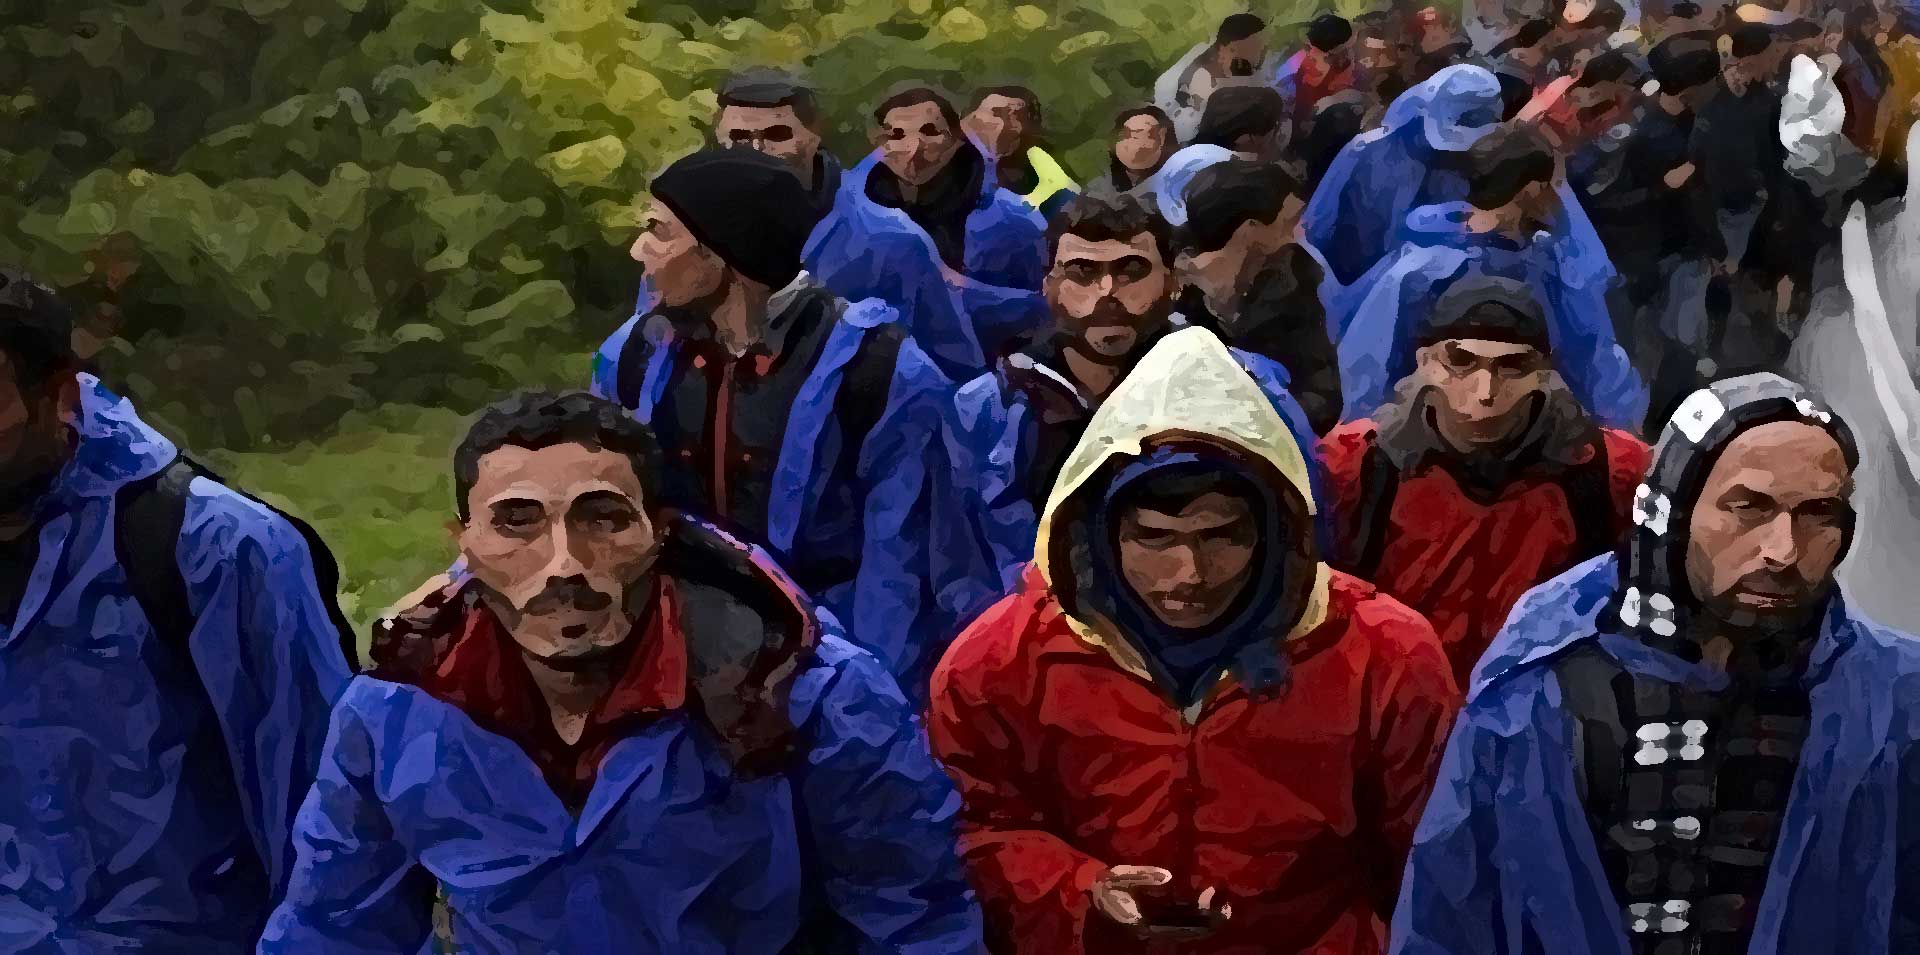 migranti rotta balcanica Trieste